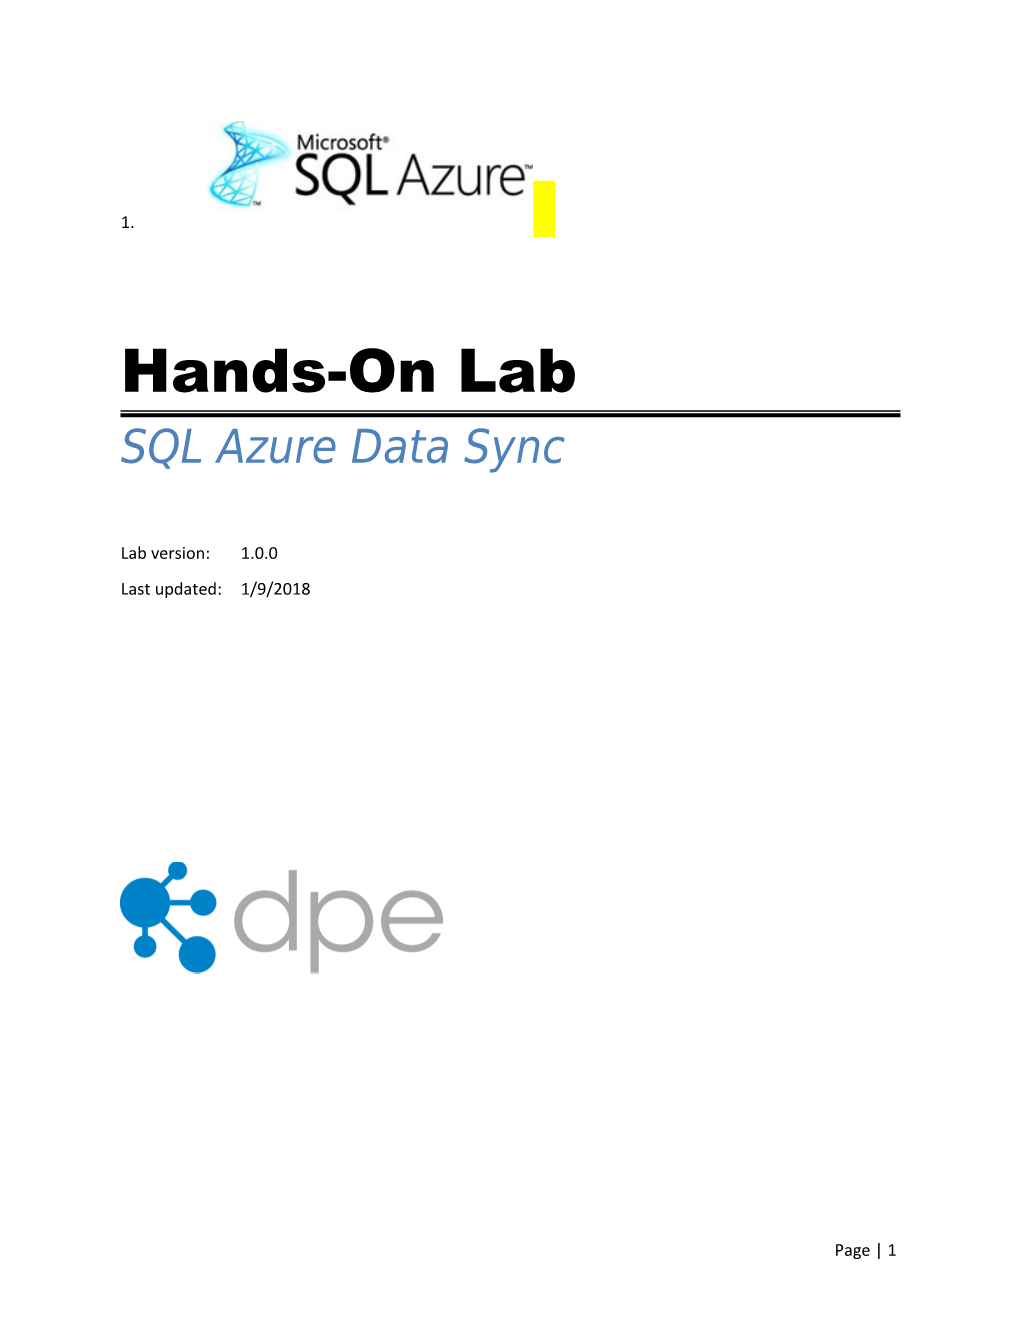 SQL Azure Data Sync